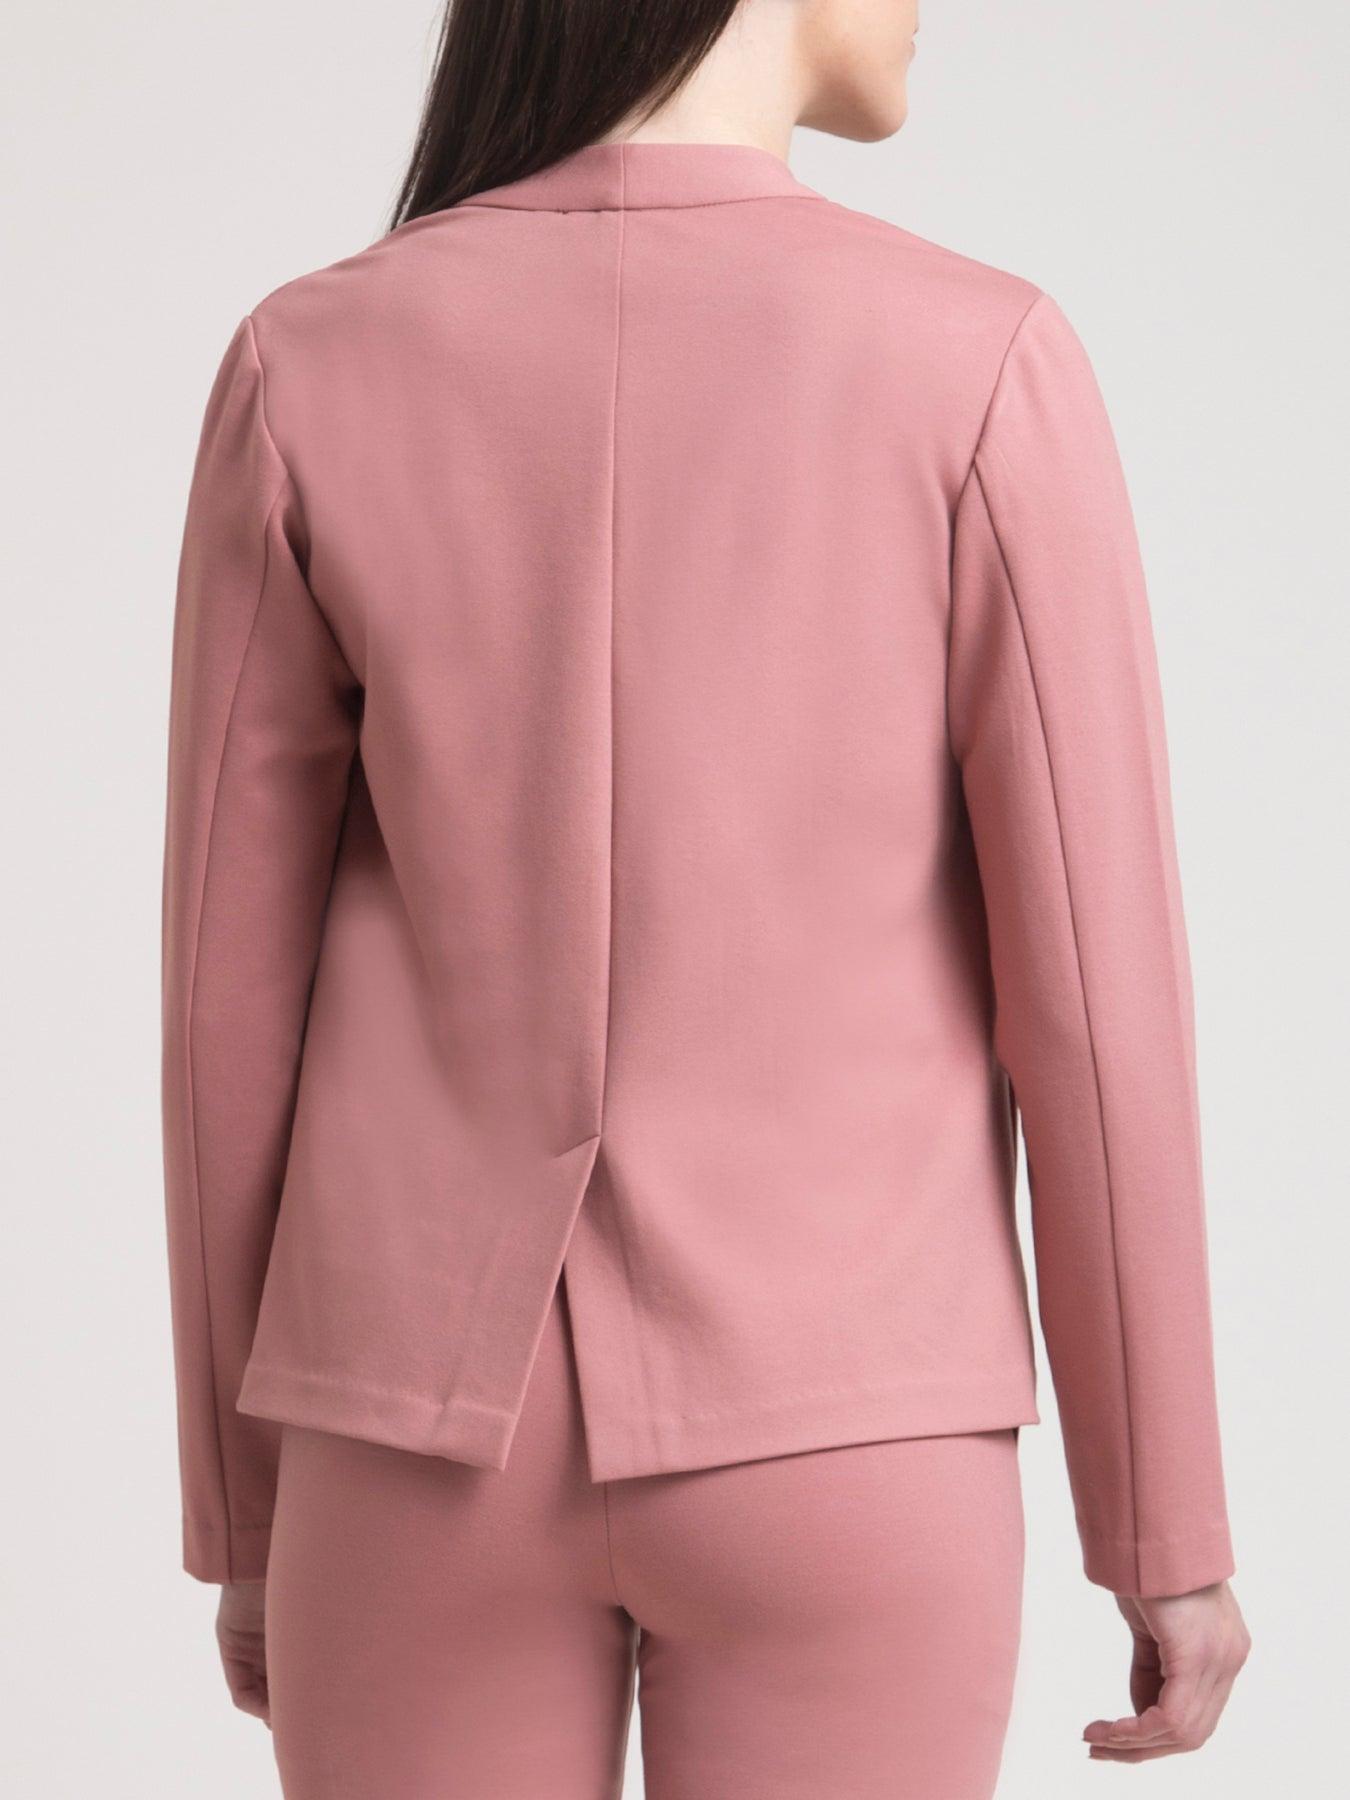 4 Way Stretch LivIn Jacket - Pink| Formal Jackets